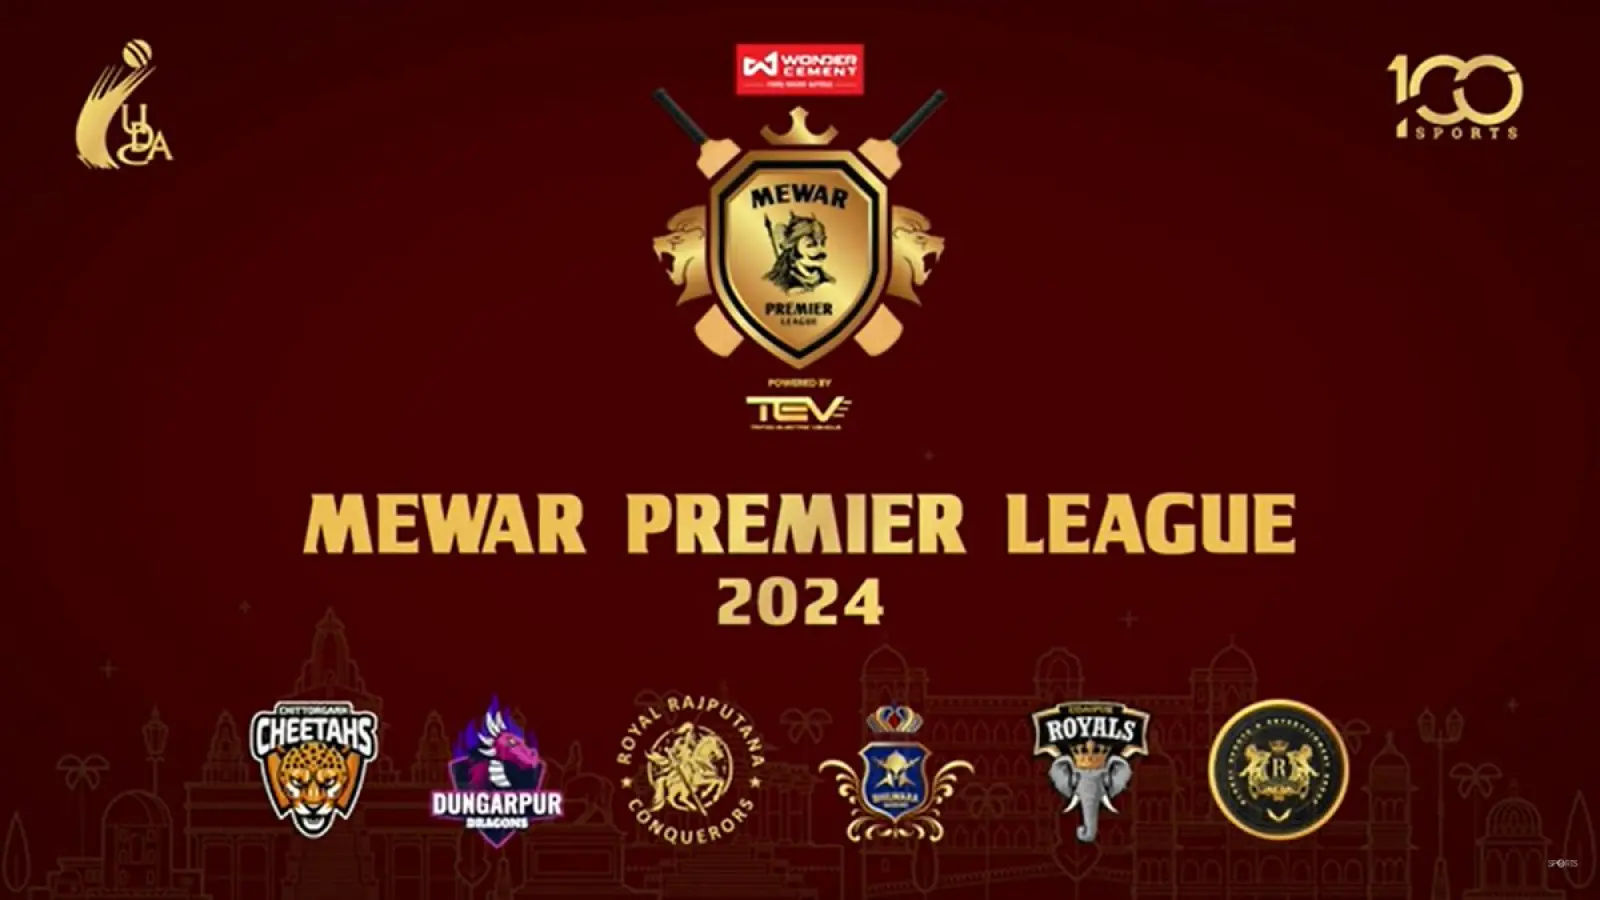 Dungarpur became the first champion of Wonder Mewar Premier League